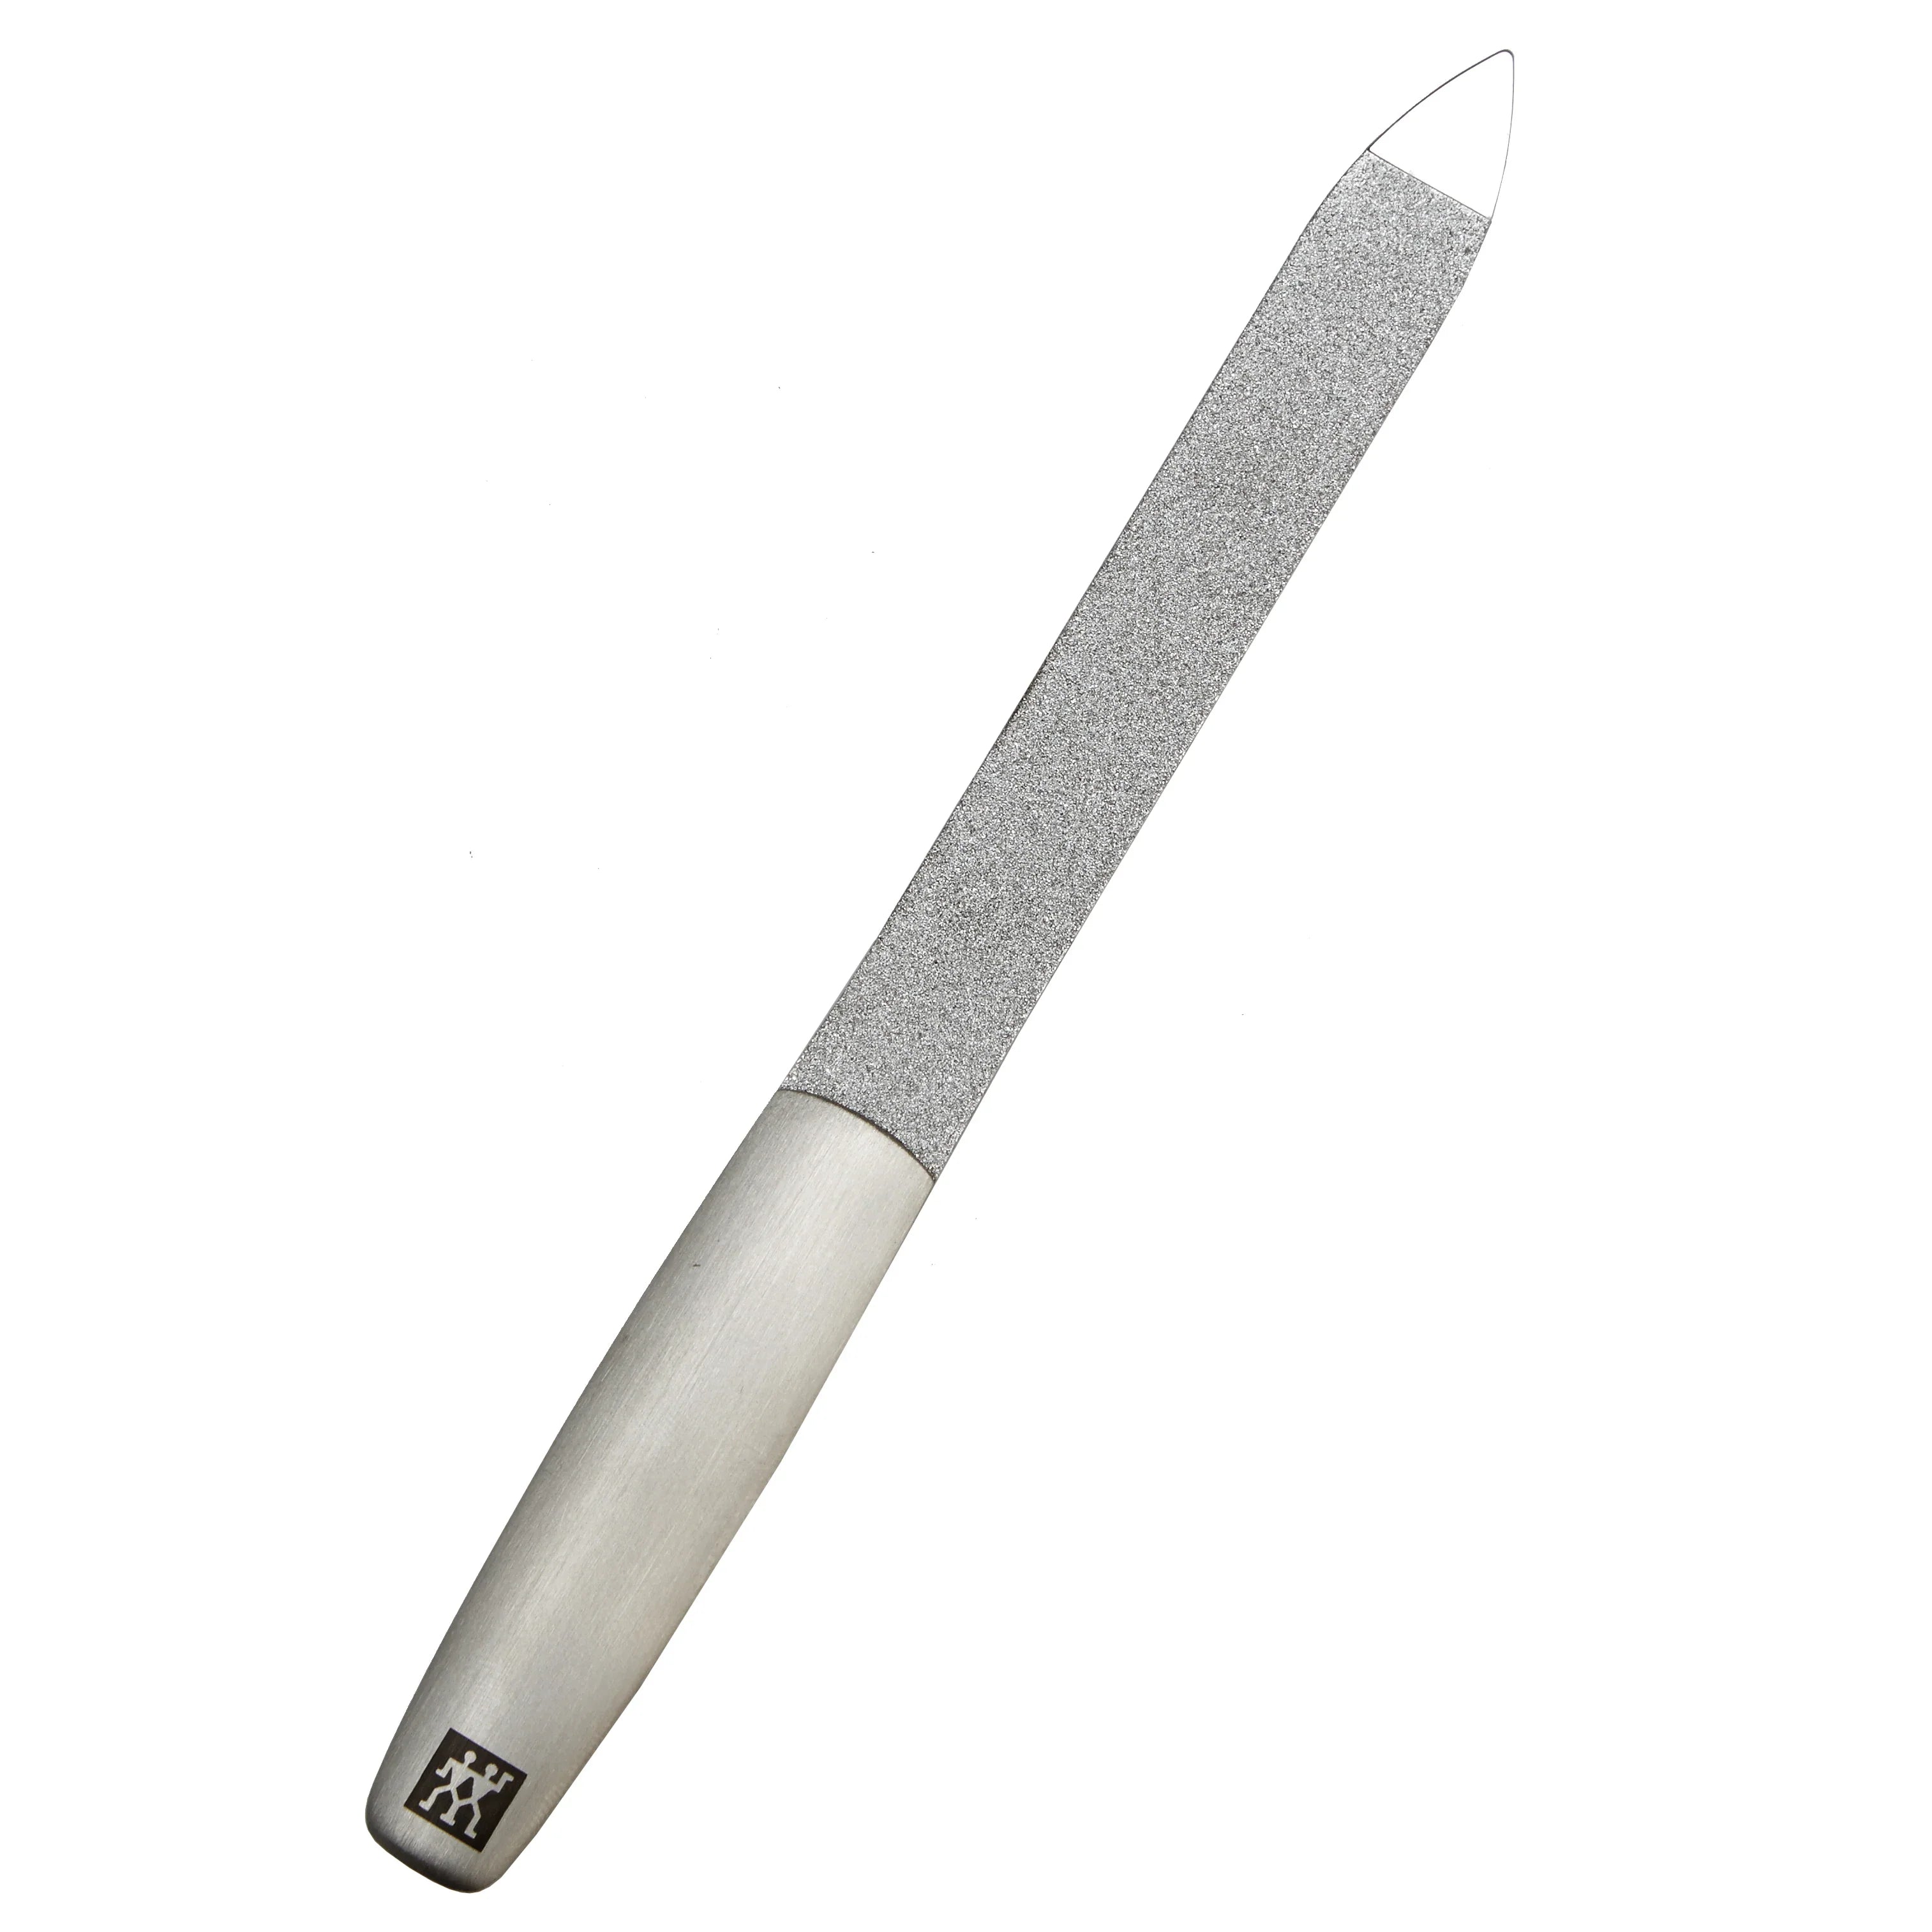 Zwilling Twinox nail file stainless steel 13 cm - silver matt finish